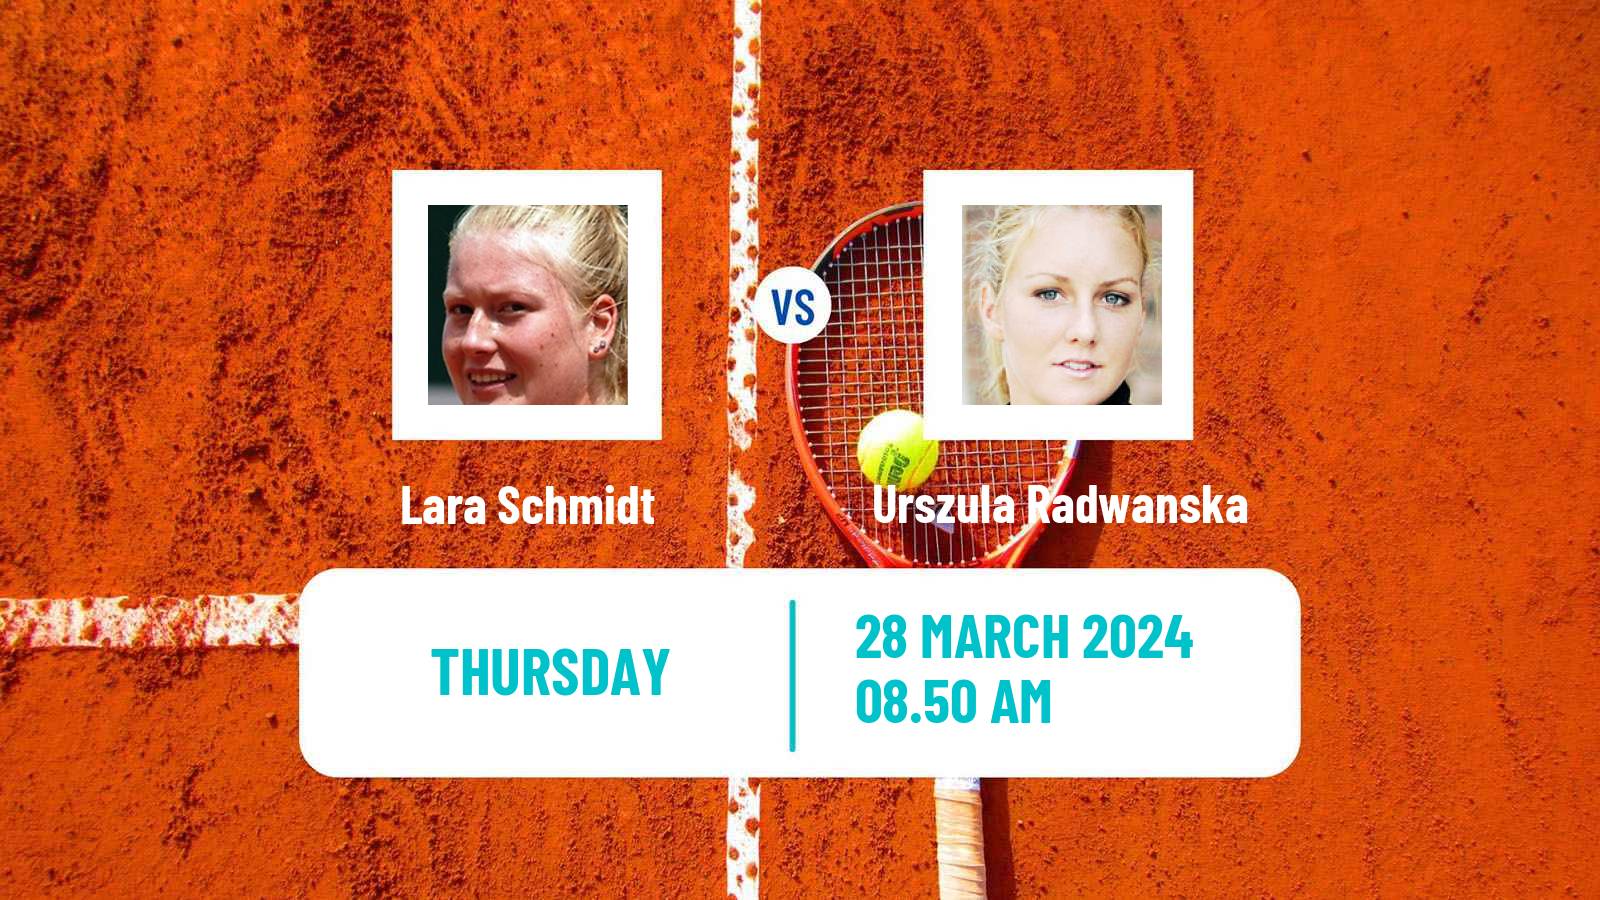 Tennis ITF W50 Murska Sobota Women Lara Schmidt - Urszula Radwanska